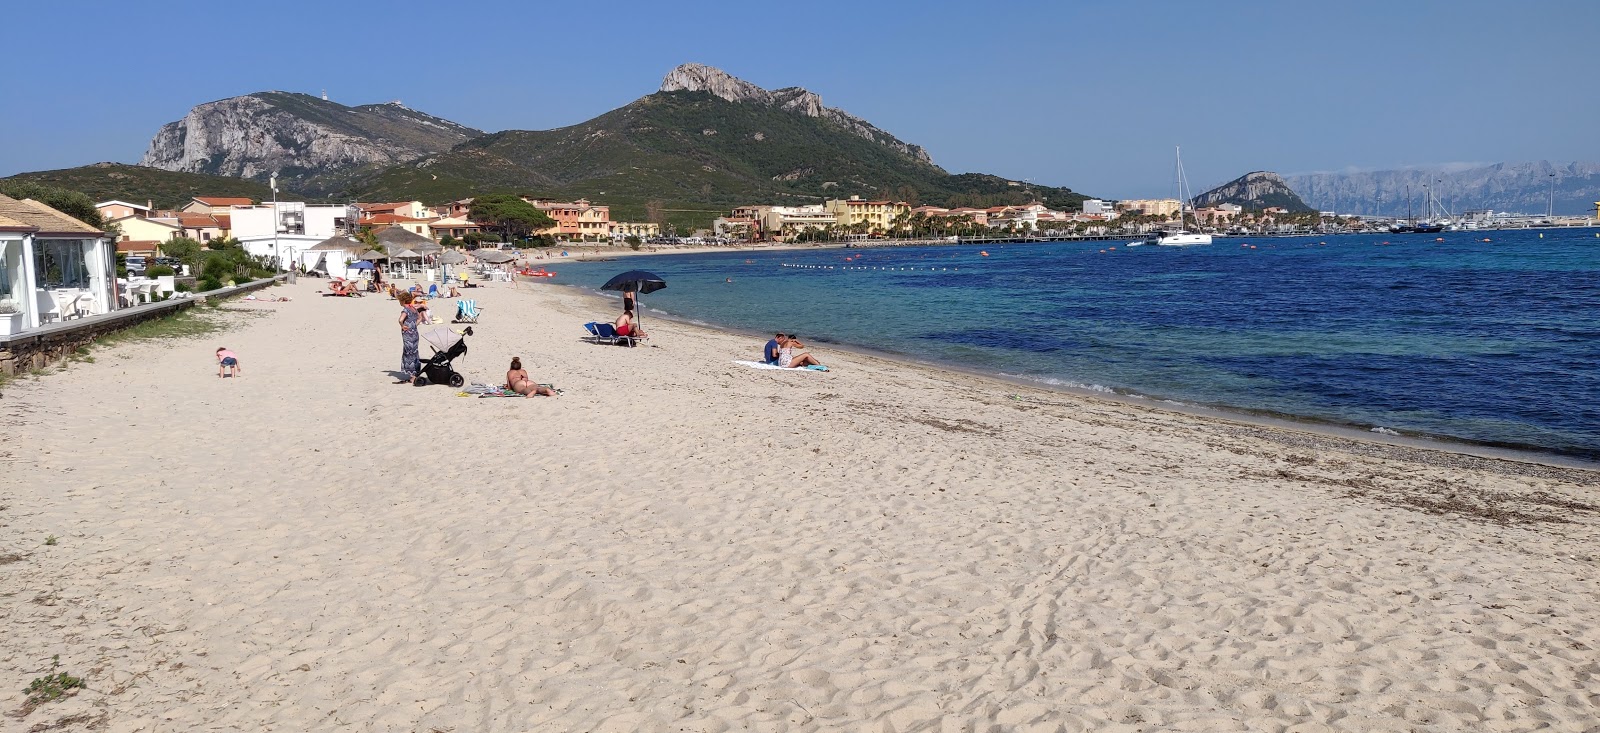 Photo of Spiaggia Golfo Aranci and its beautiful scenery